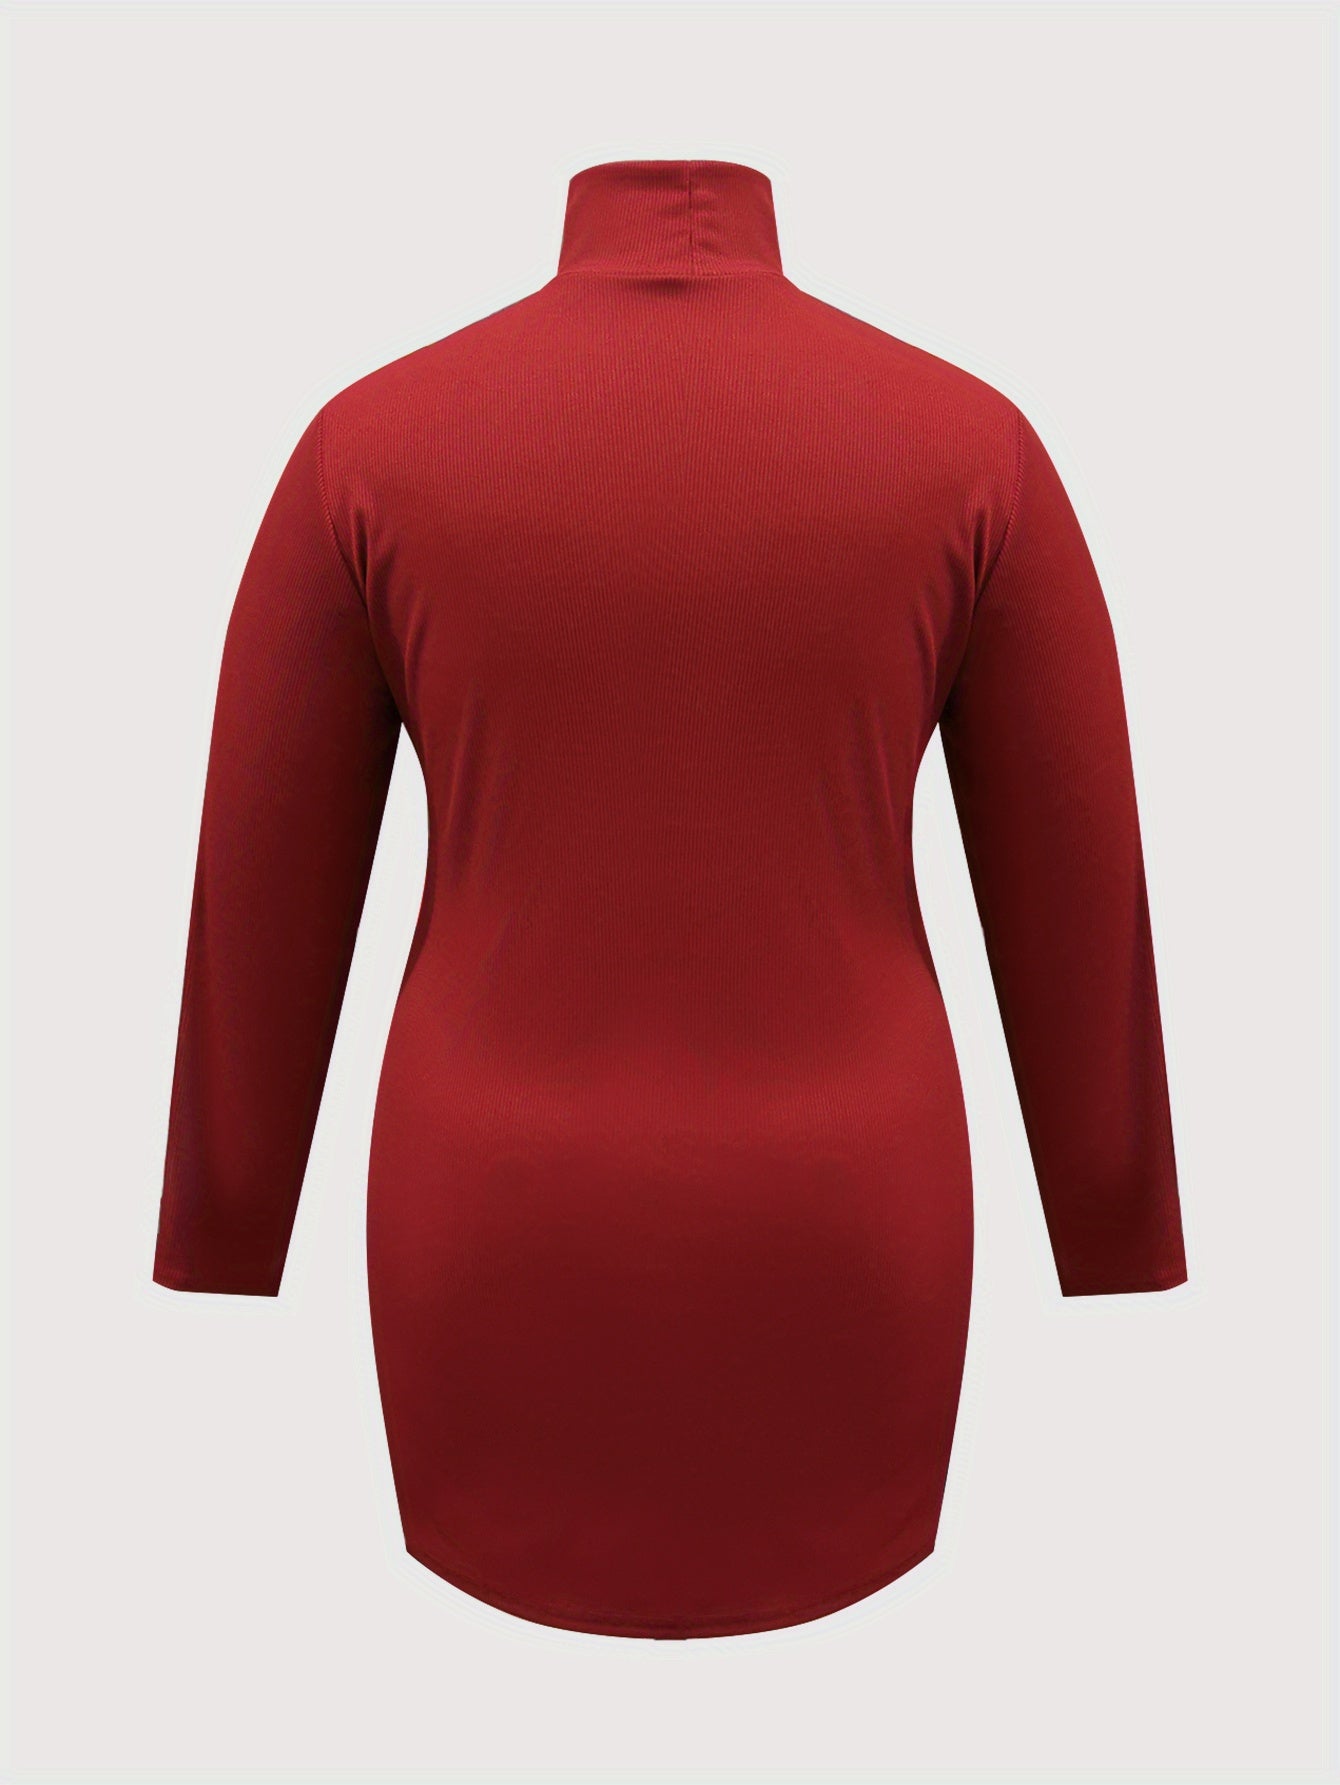 Antmvs Plus Size Sexy Dress, Women's Plus Solid Long Sleeve Mock Neck Slight Stretch Bodycon Dress